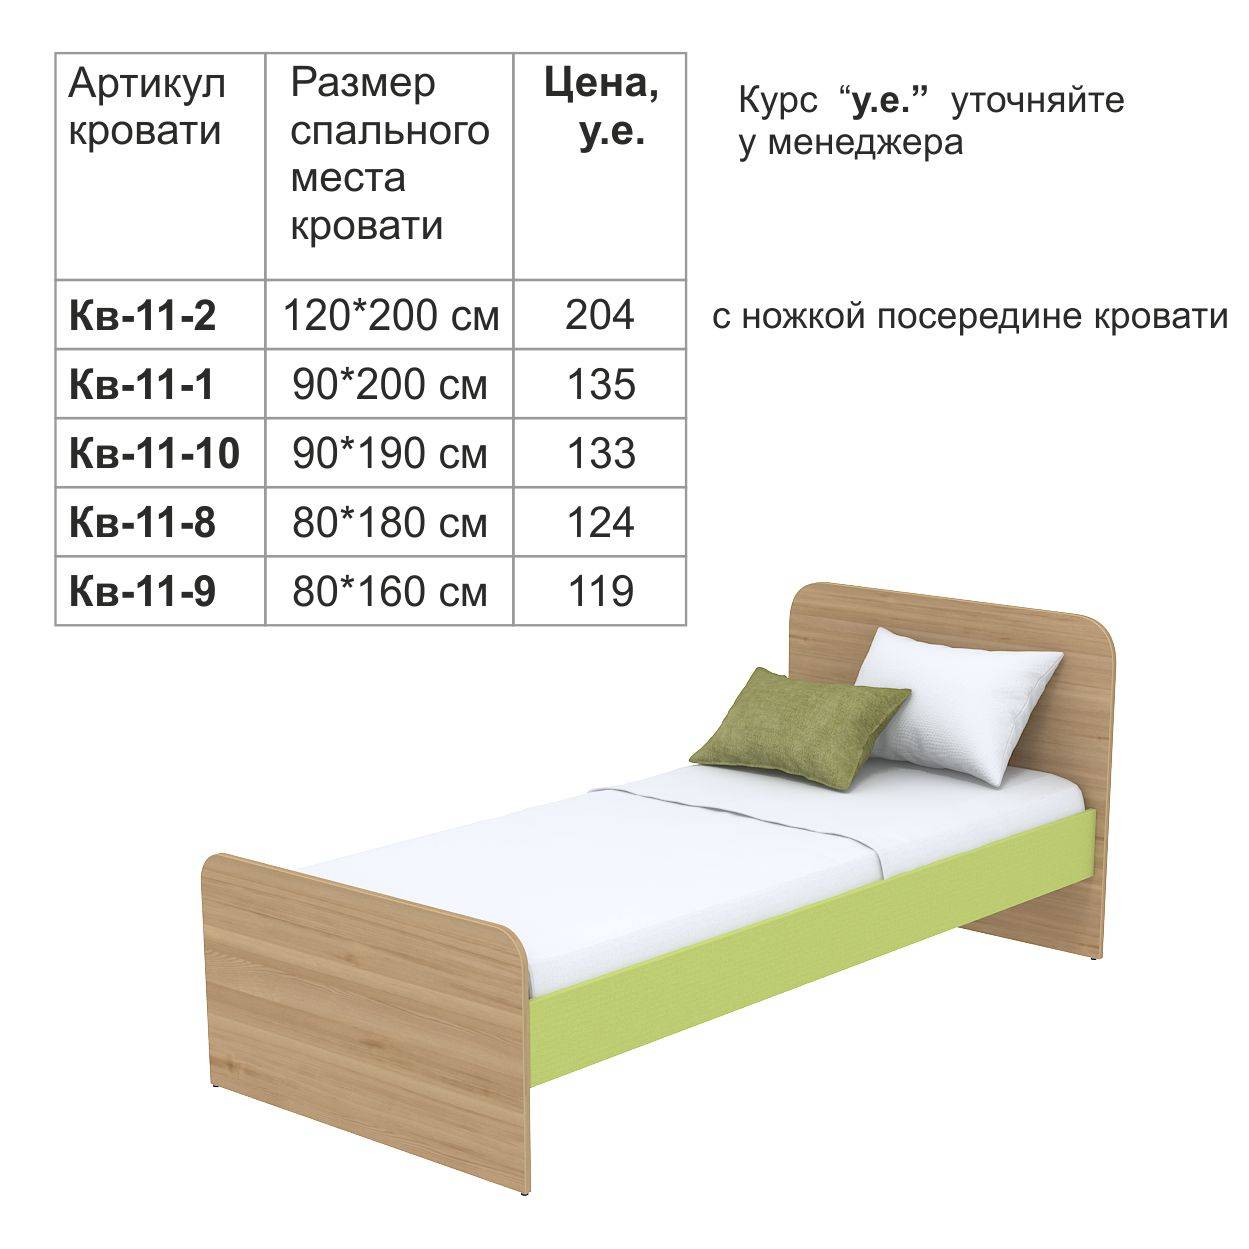 Размер матраса 1.5 спальной кровати